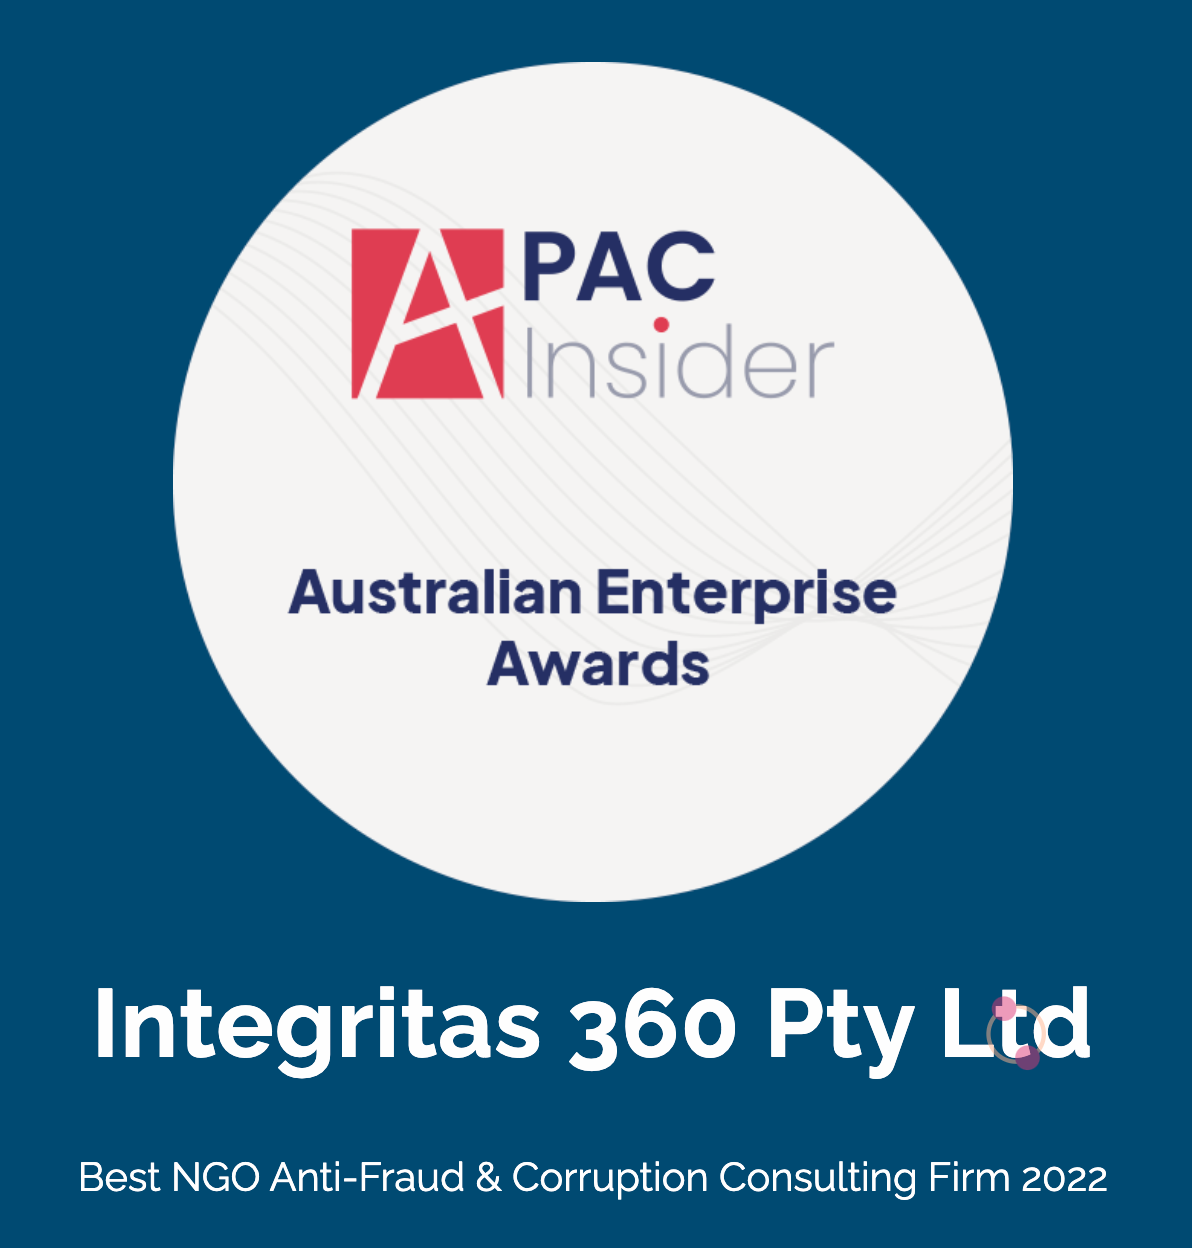 APAC Insider Award